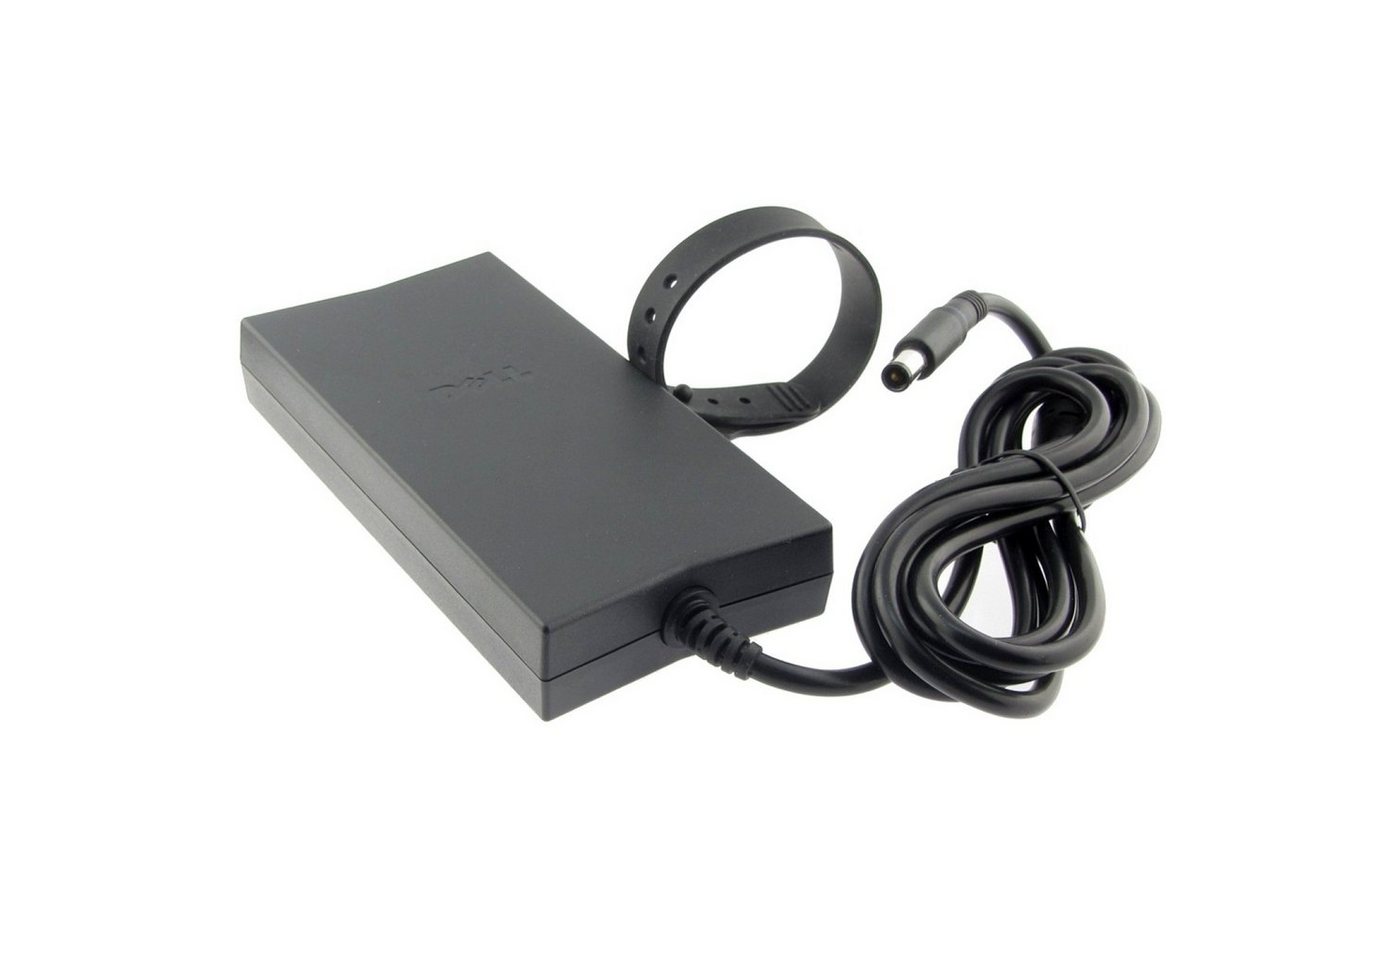 Dell AC Adapter 130W, PA-13,PA-4E,DA130PE1-00,X9366 with EU Cable Notebook-Netzteil (Stecker: 7.4 x 5.0 mm rund mit Pin, Ausgangsleistung: 131 W) von Dell